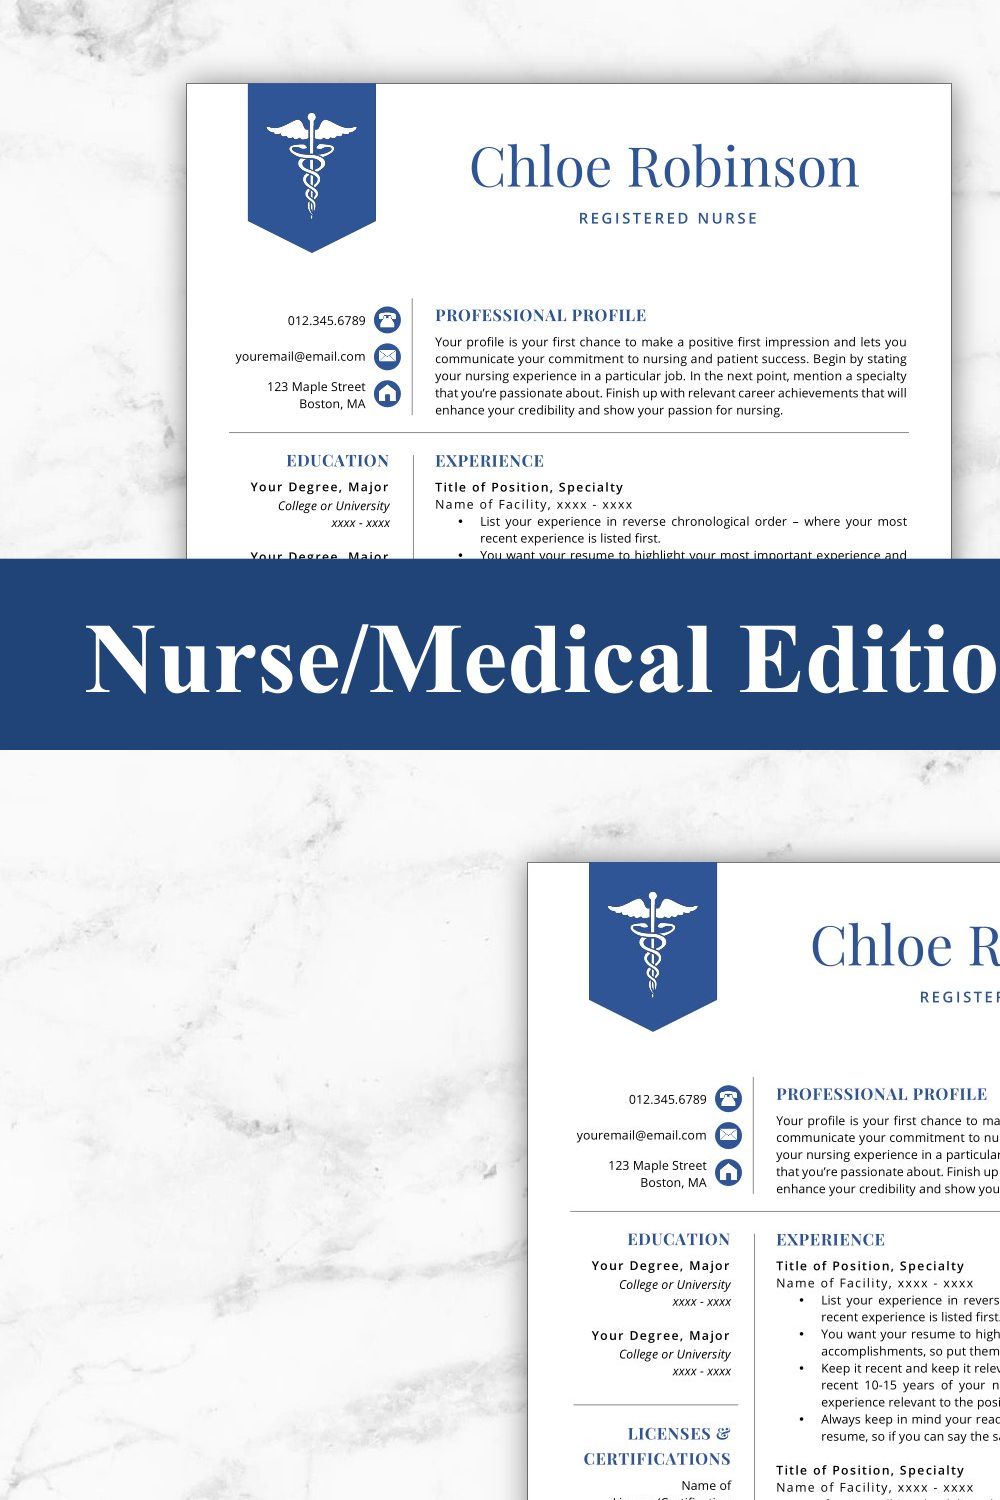 Nurse Resume Template - Chloe pinterest preview image.